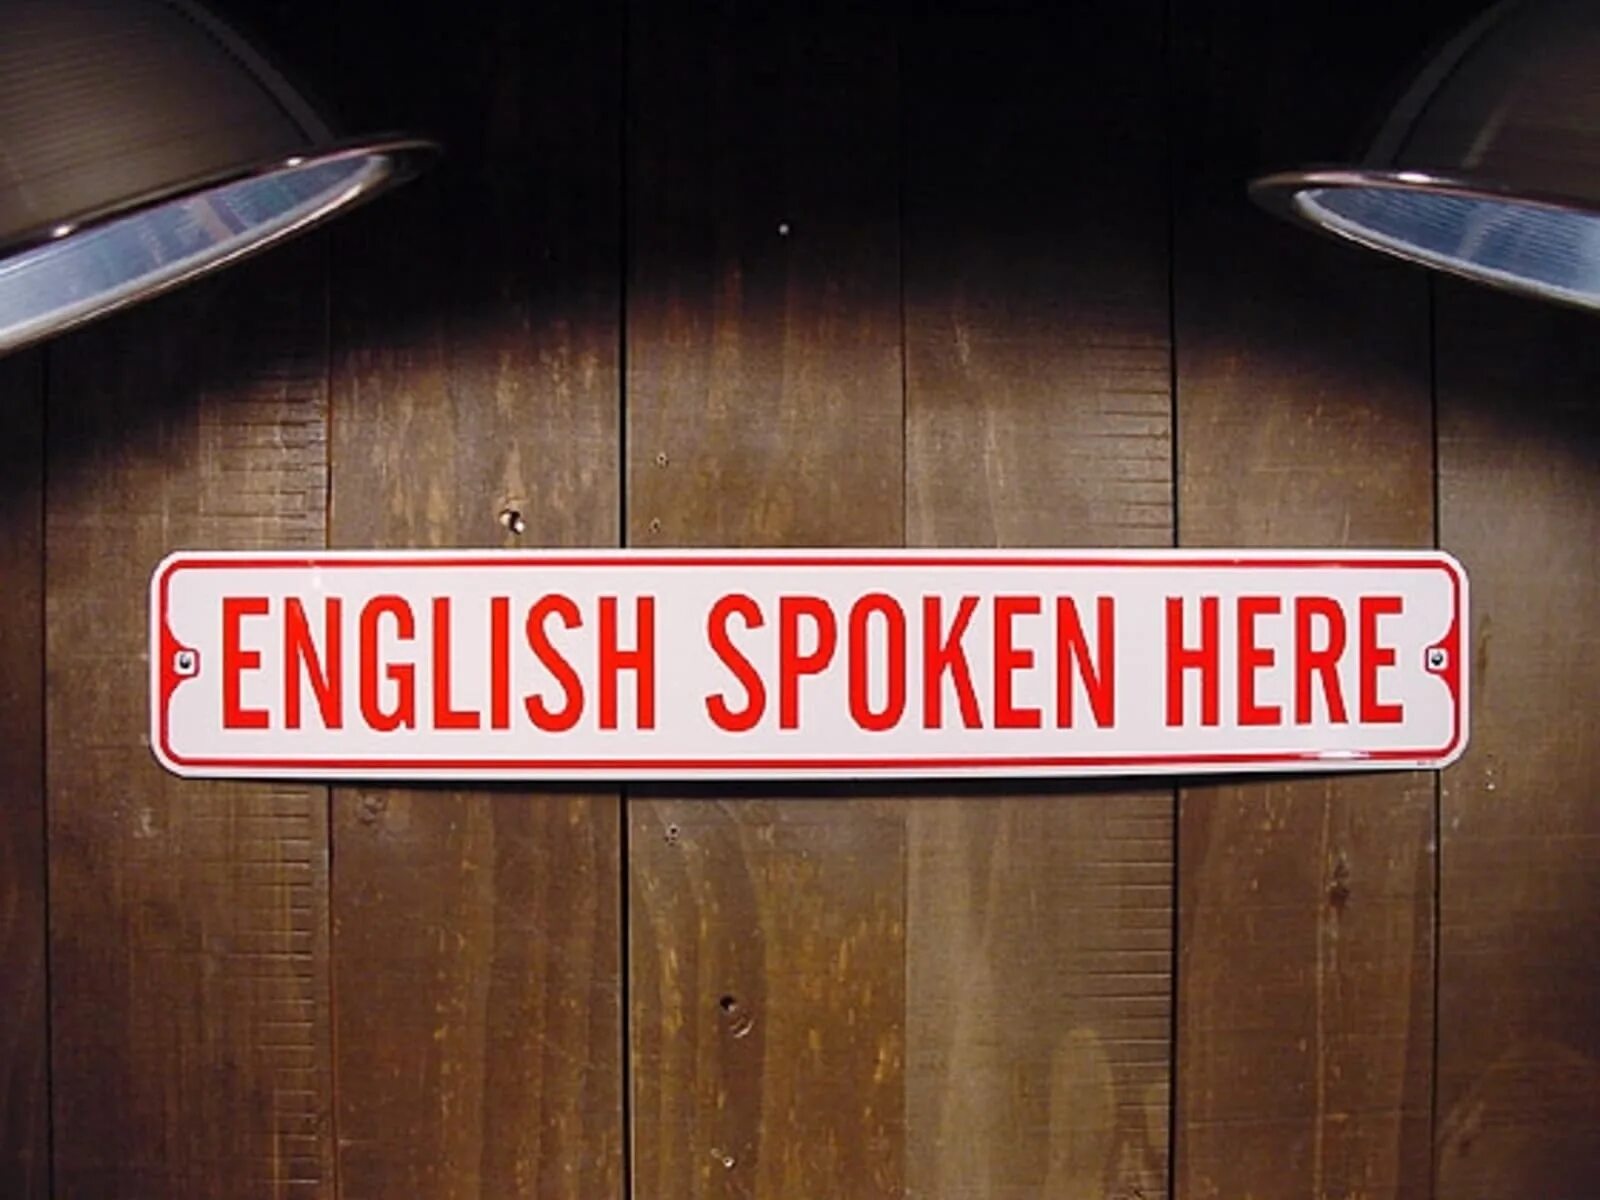 English spoken here. English Zone. Speak only English. English speaking Zone.